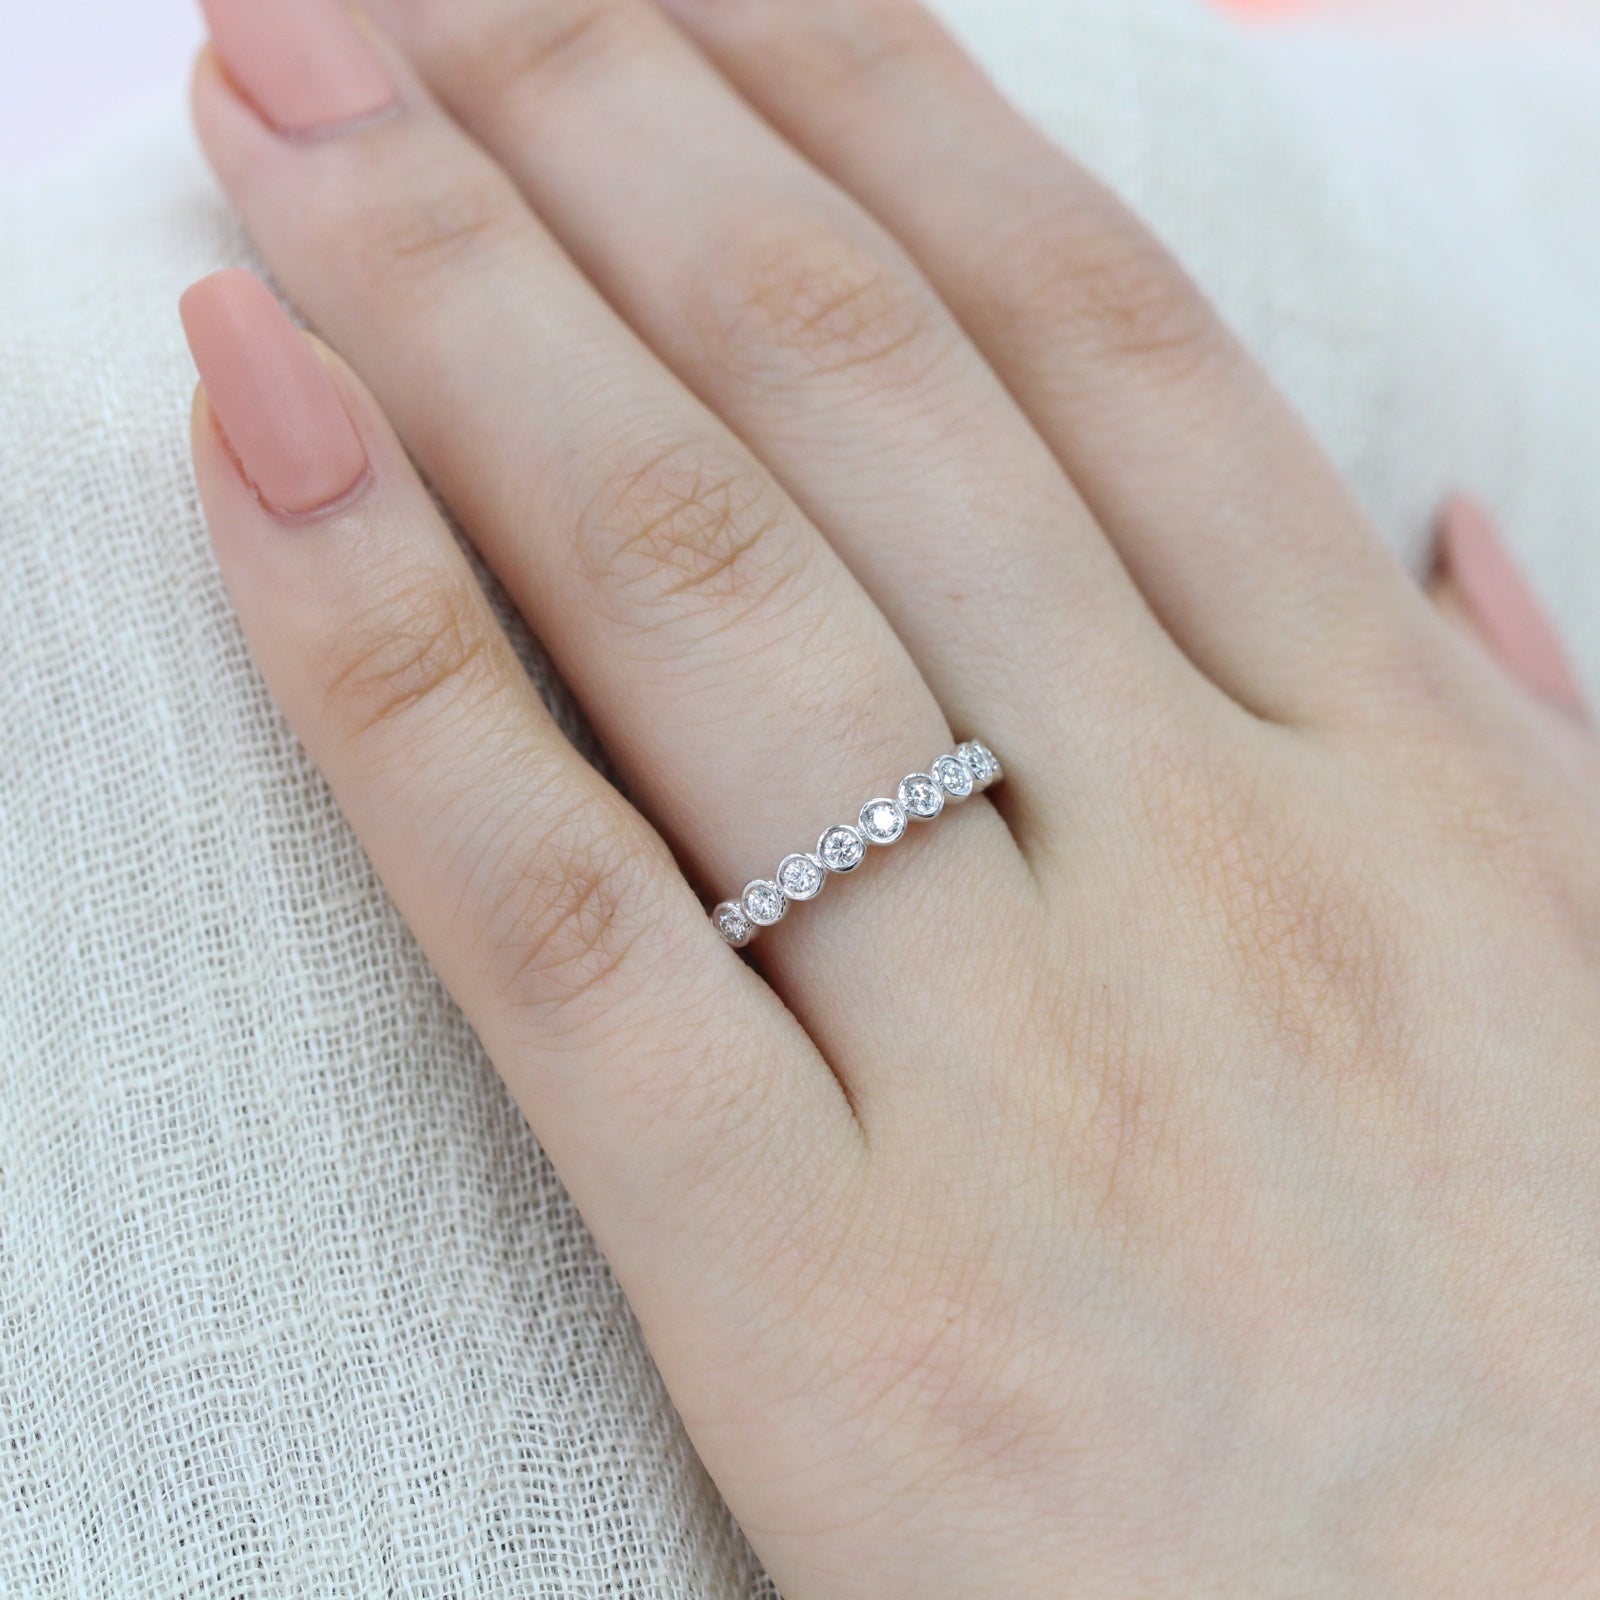 Bezel Set Diamond Wedding Ring in 14k White Gold Half Eternity Band, Size 6.5